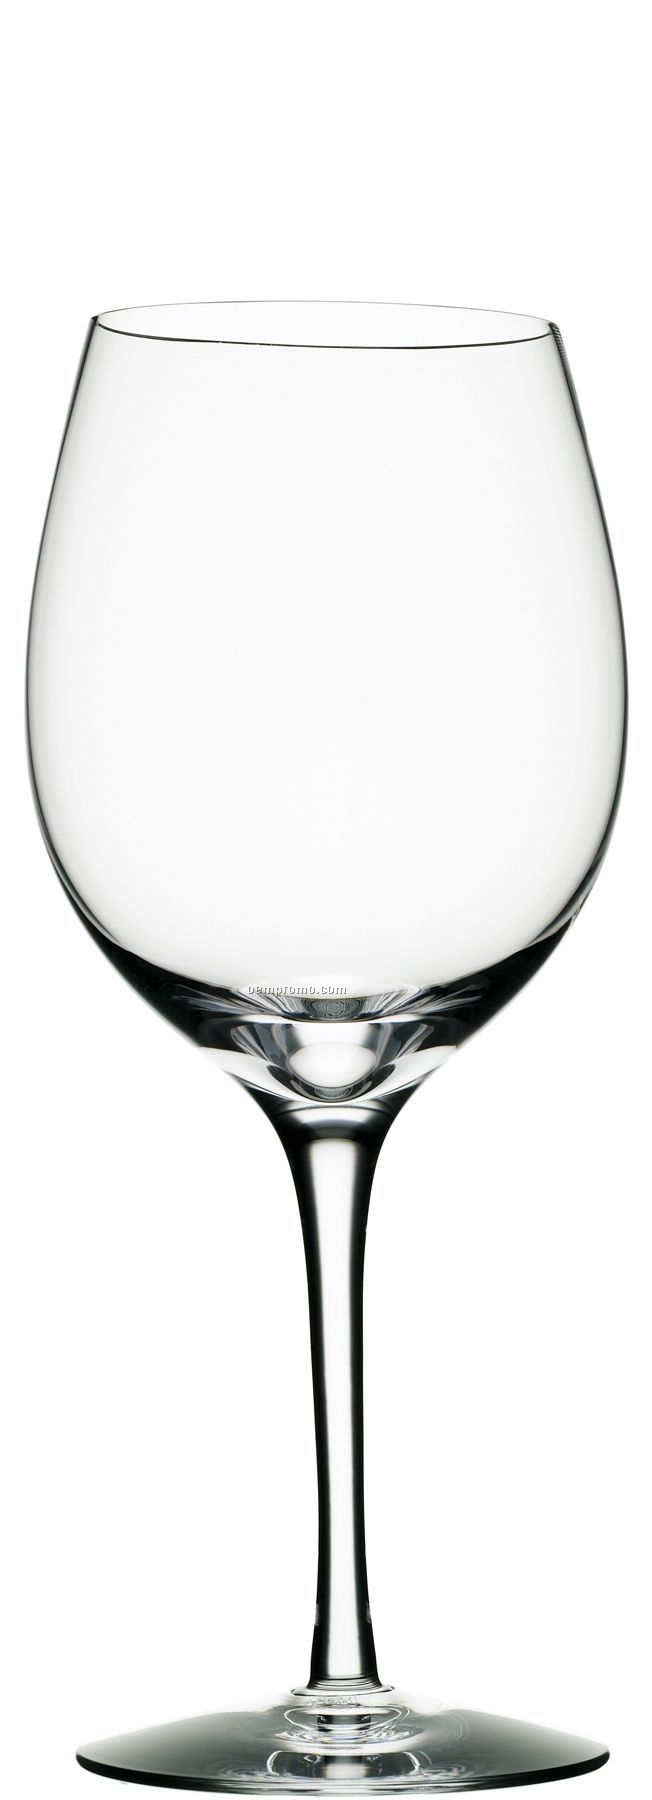 Merlot Crystal Goblet Glass By Erika Lagerbielke